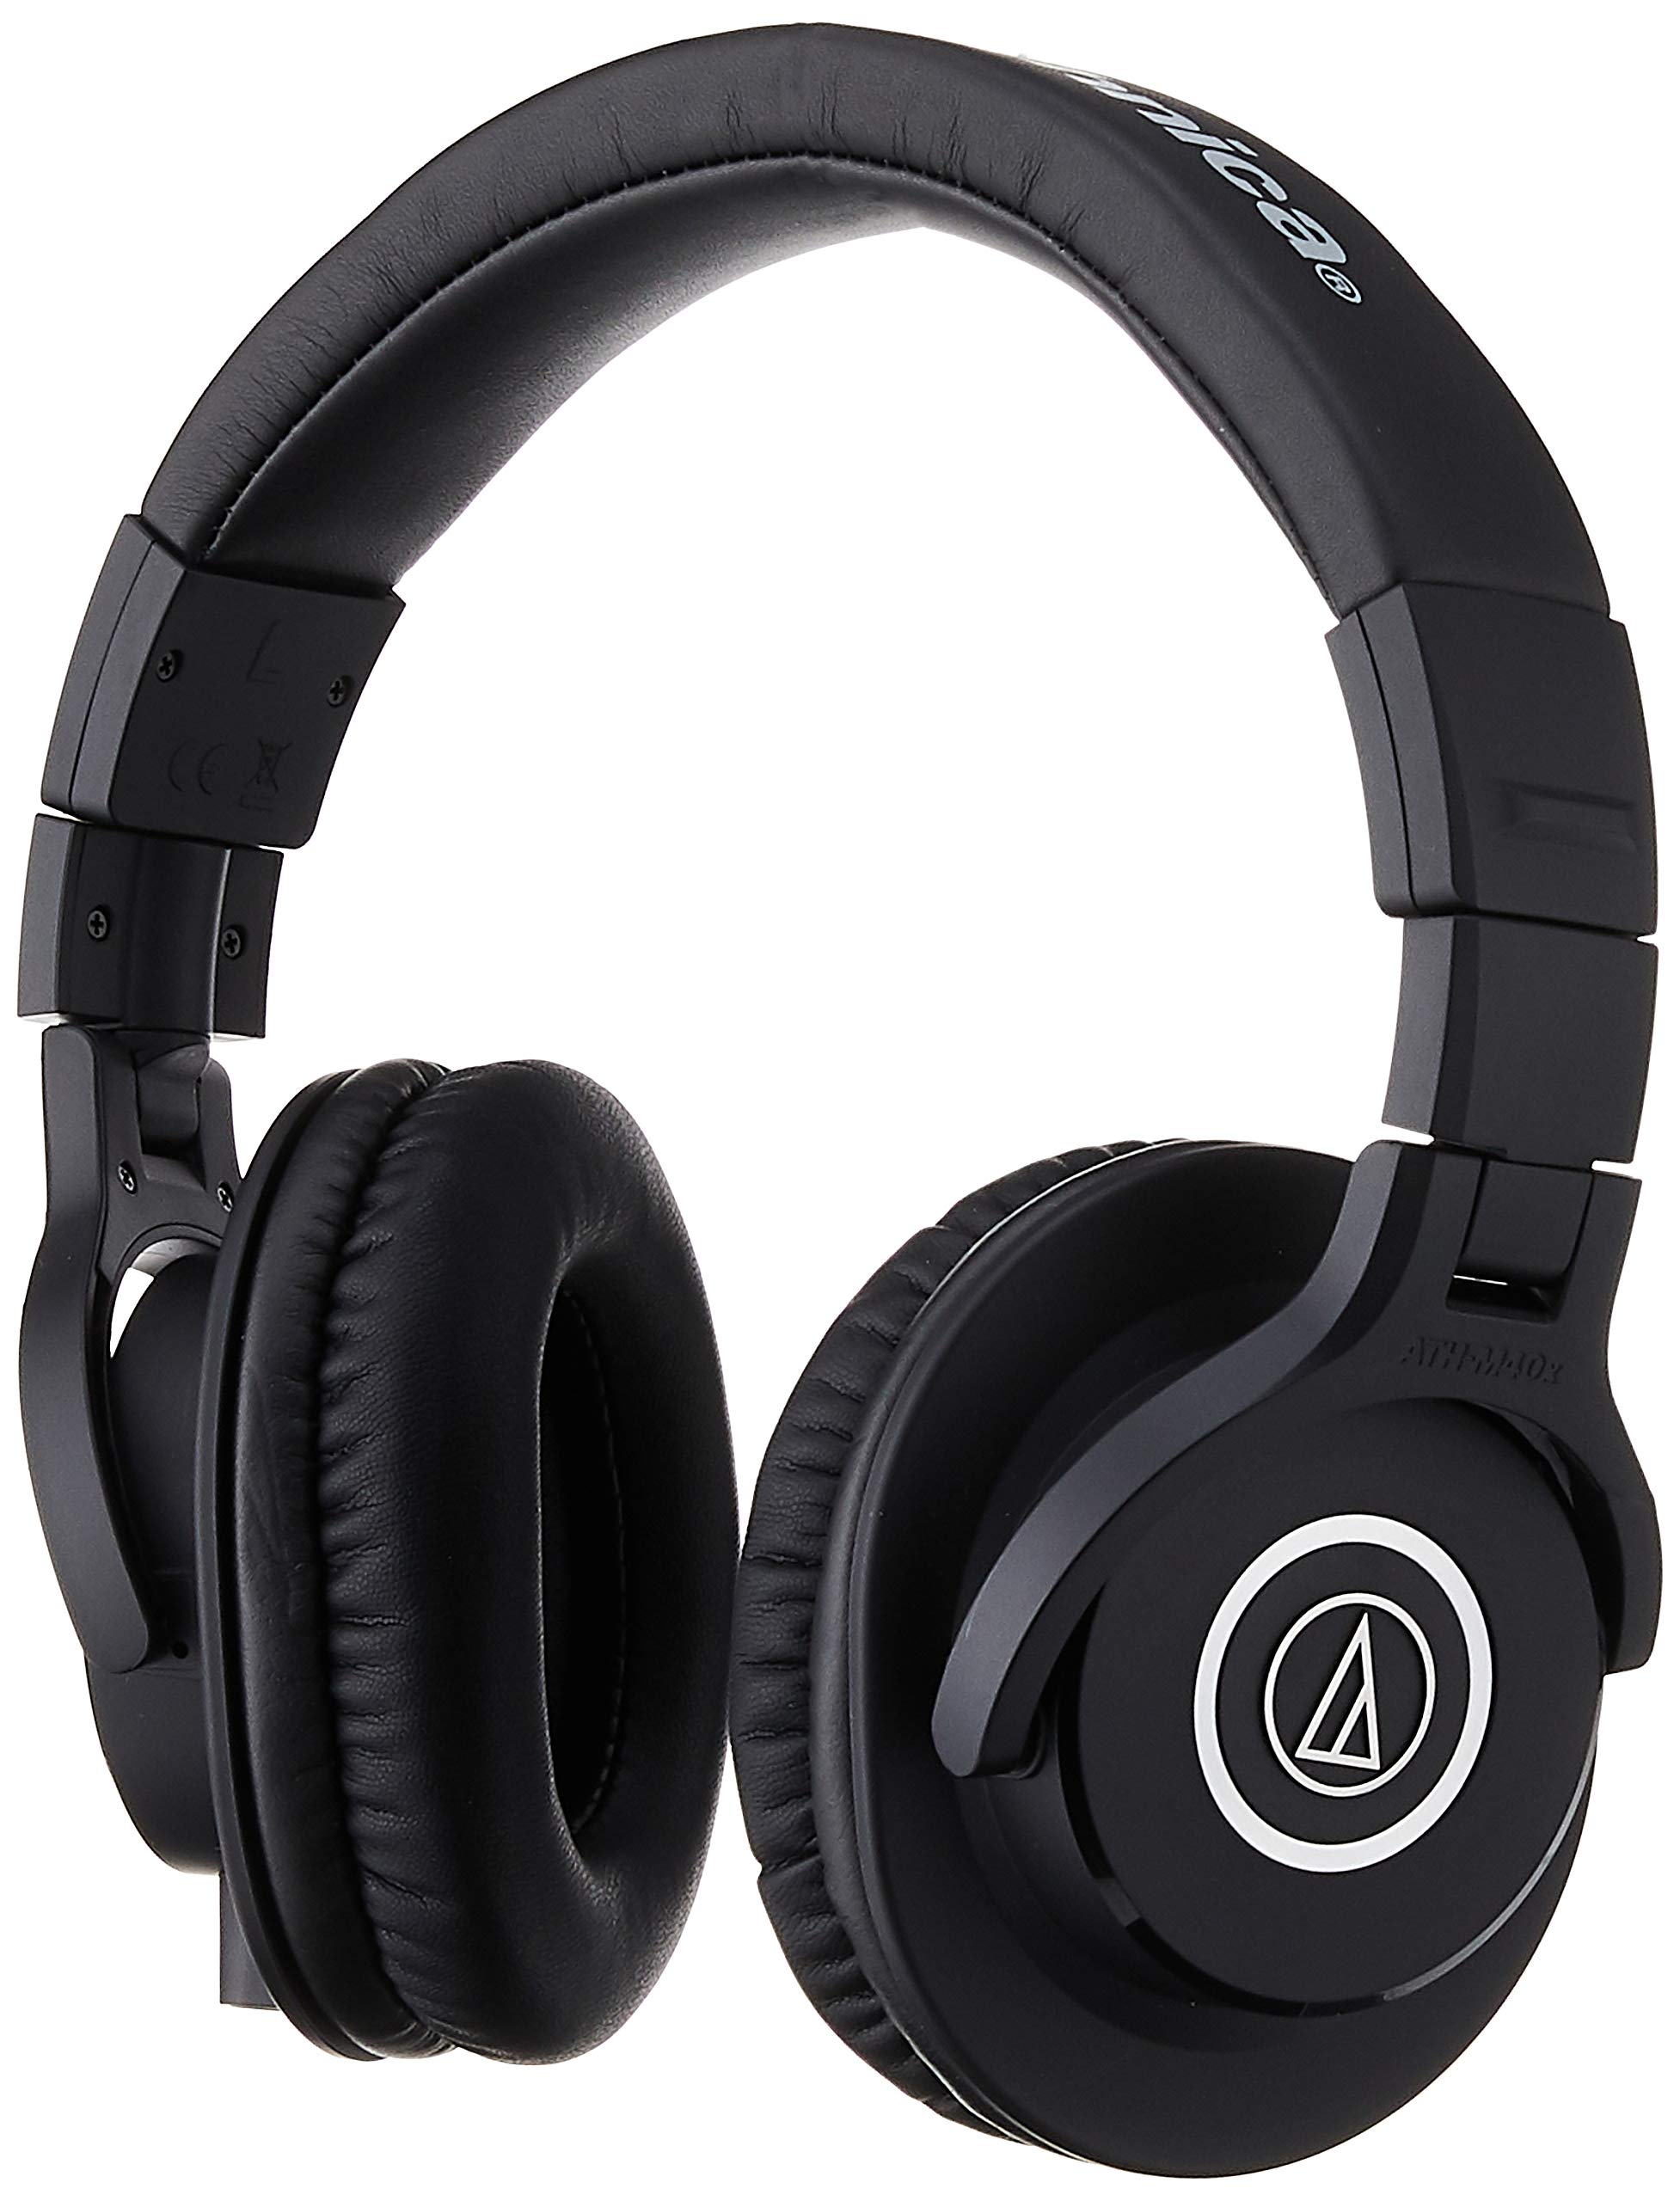 audio-technica ATH-M40x 专业录音室监听耳机，黑色，采用尖端工程设计，90 度旋转耳罩，专业级耳垫/头带，随附可拆卸线缆